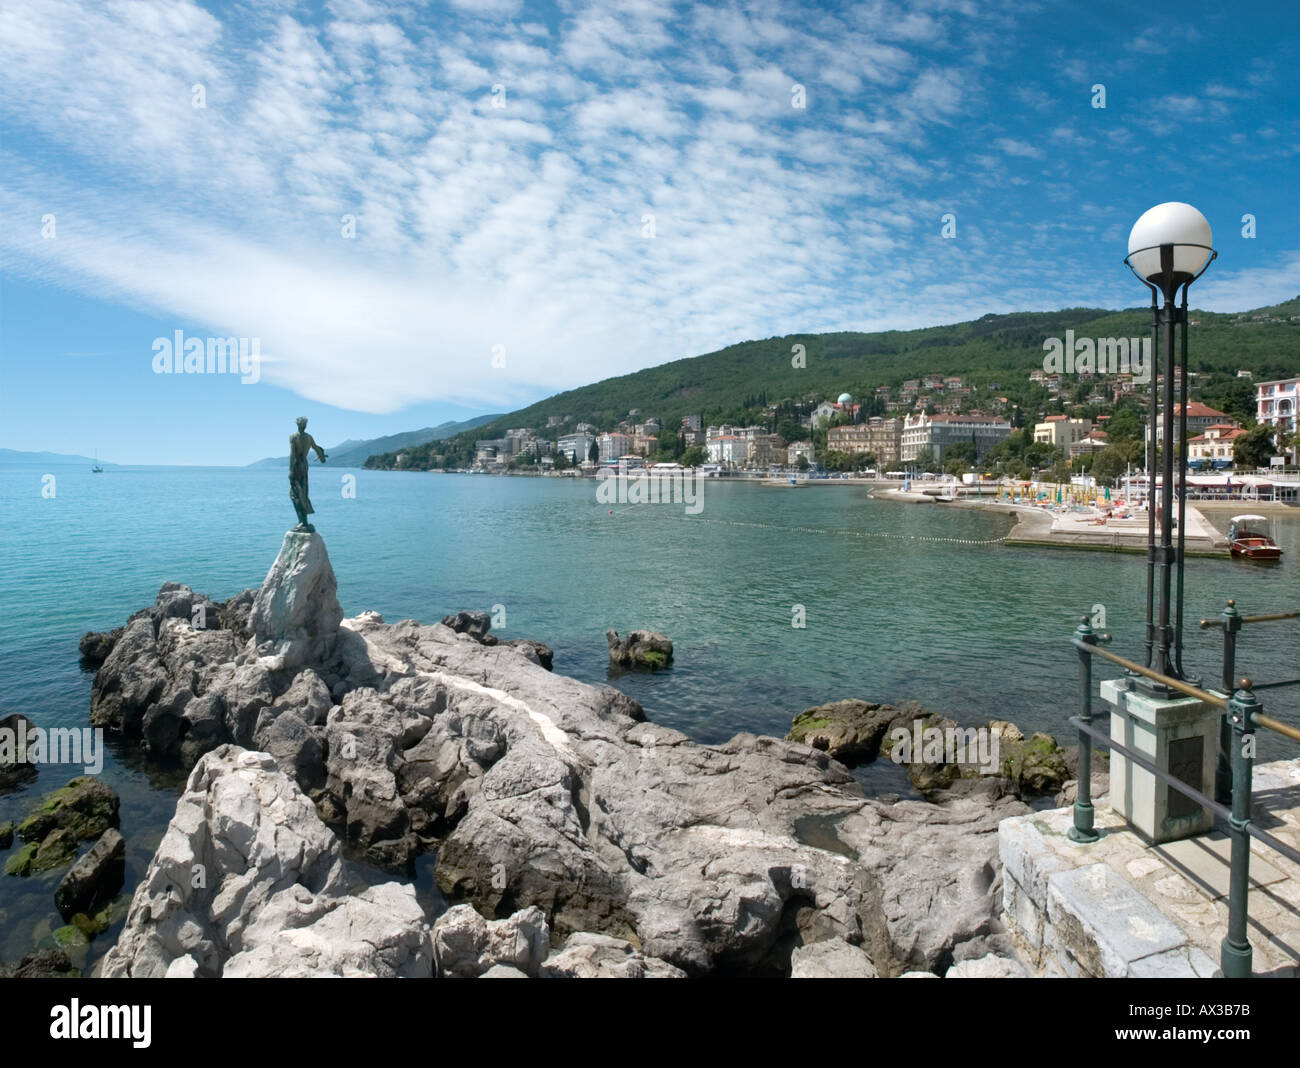 Statue on the seafront in Opatija, Istria, Croatia Stock Photo